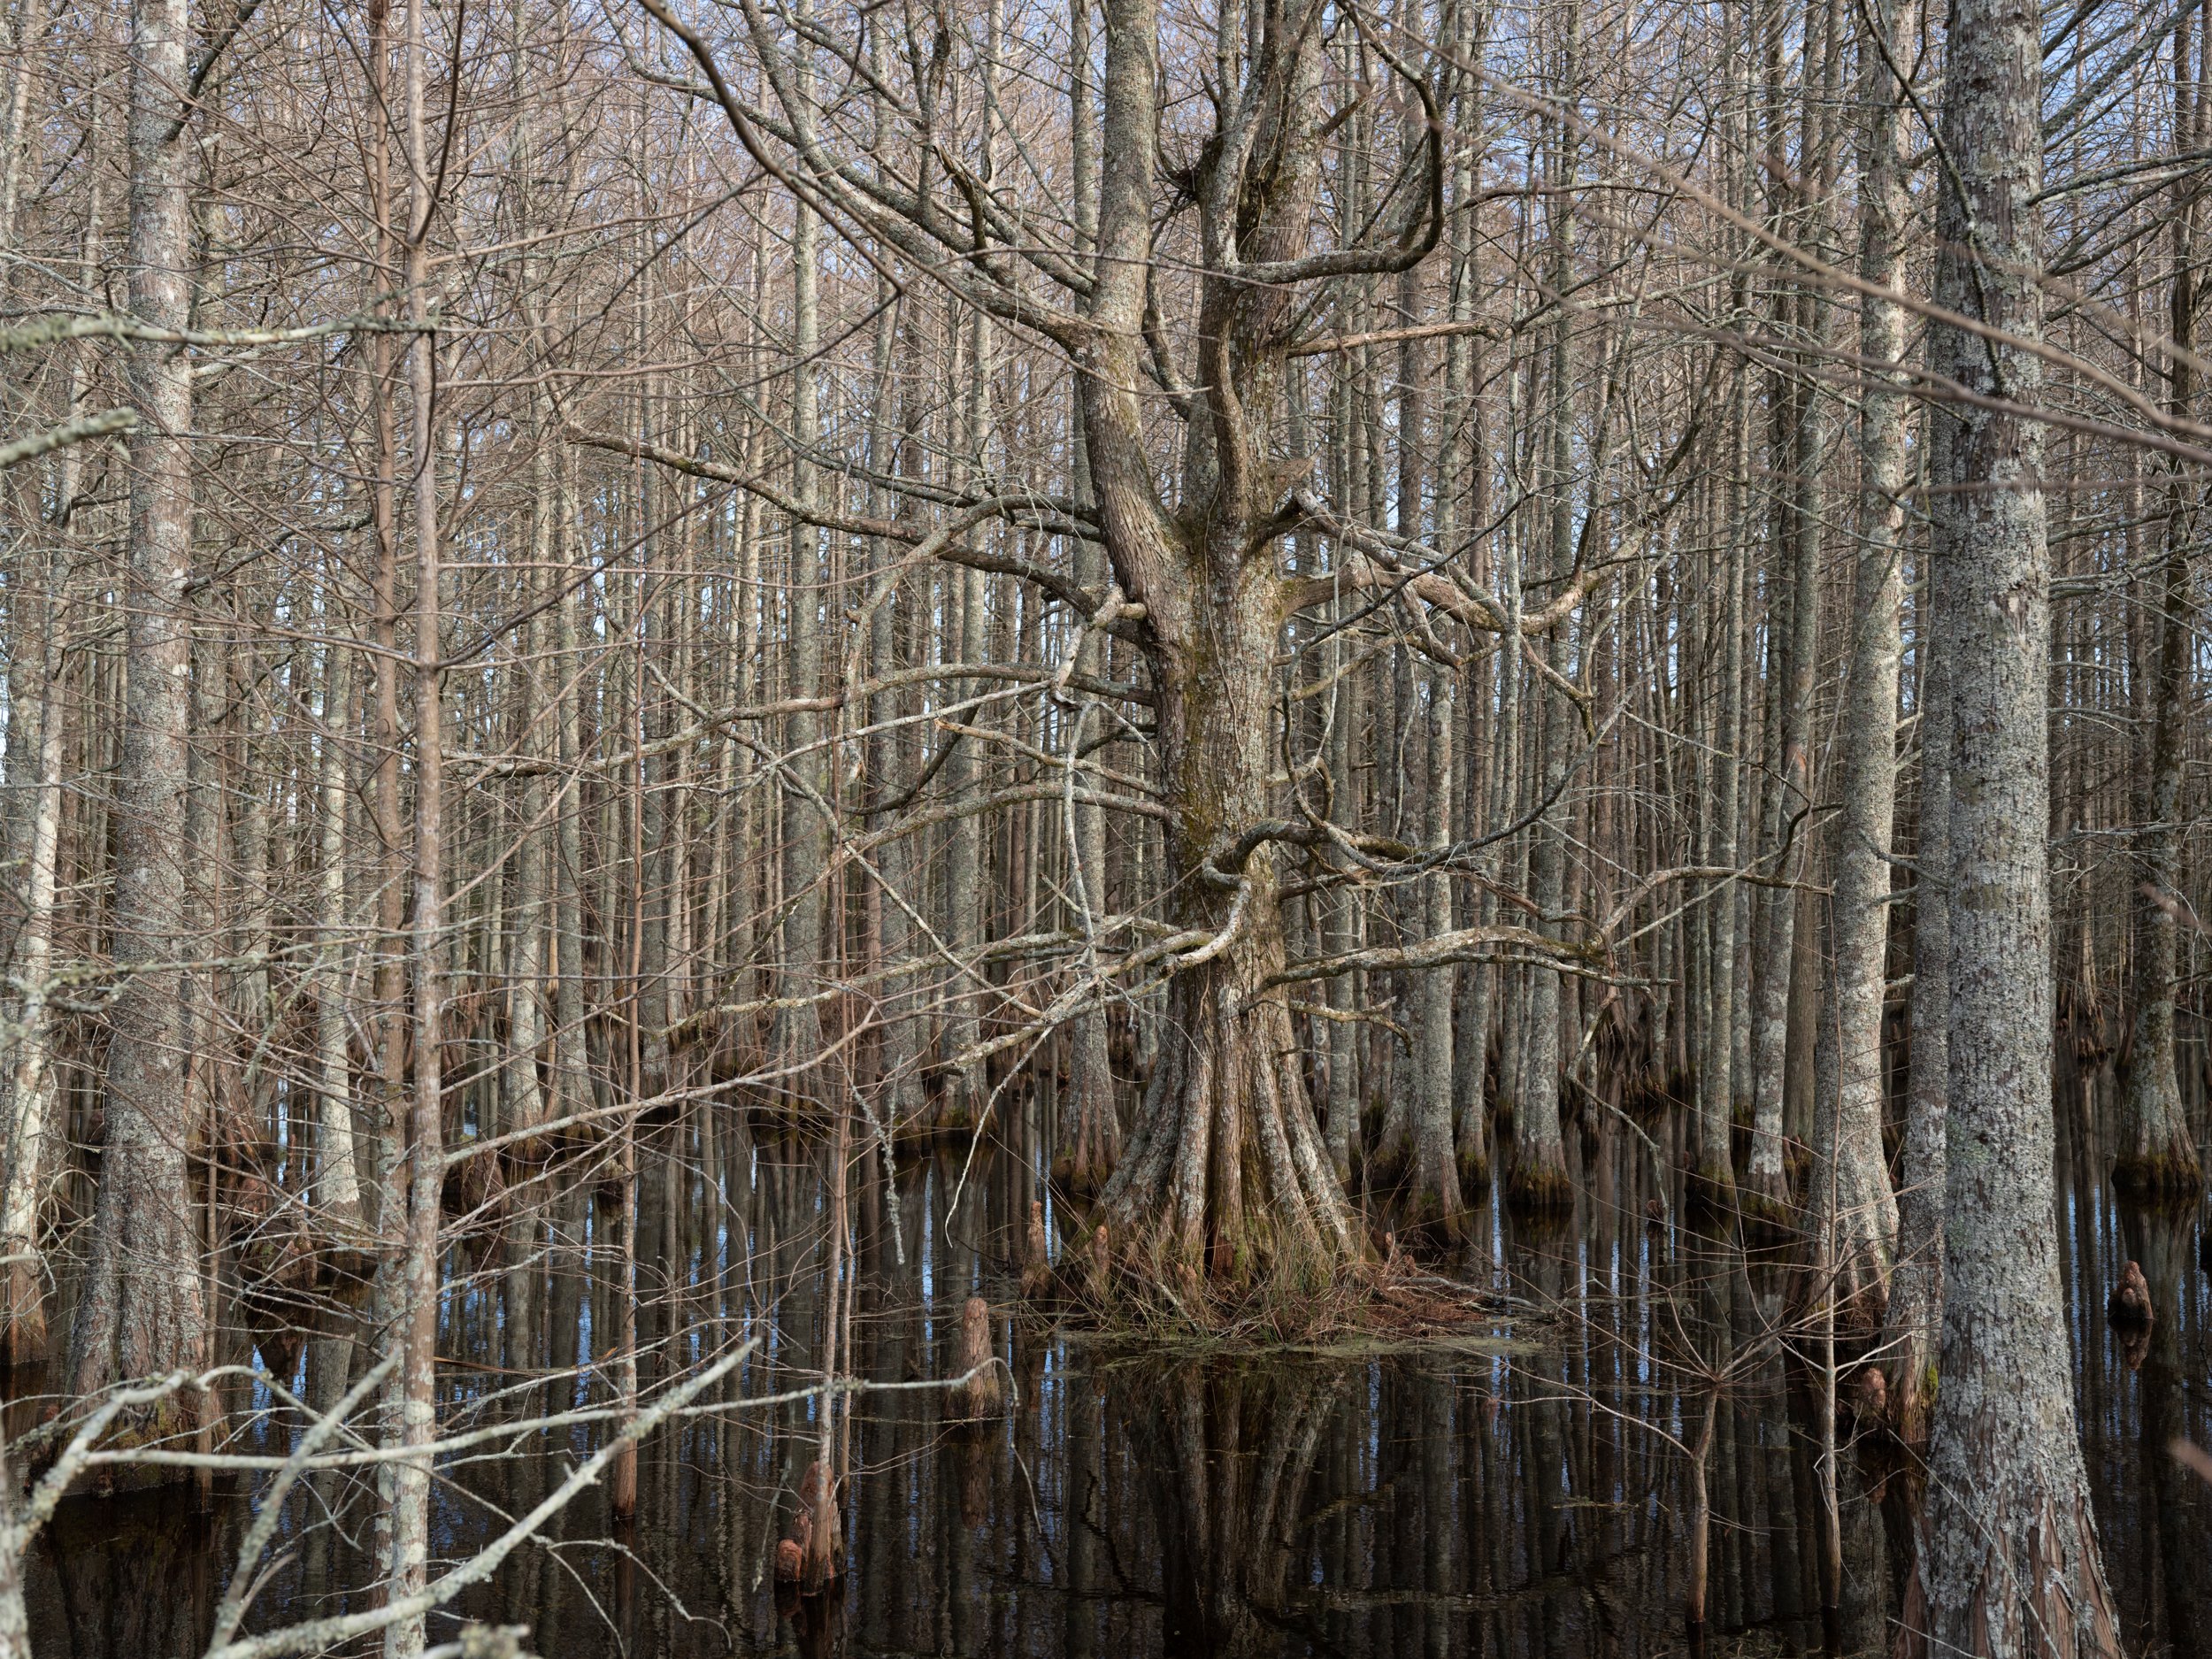 Cypress Swamp, Lake Mattamuskeet Wildlife Refuge, NC